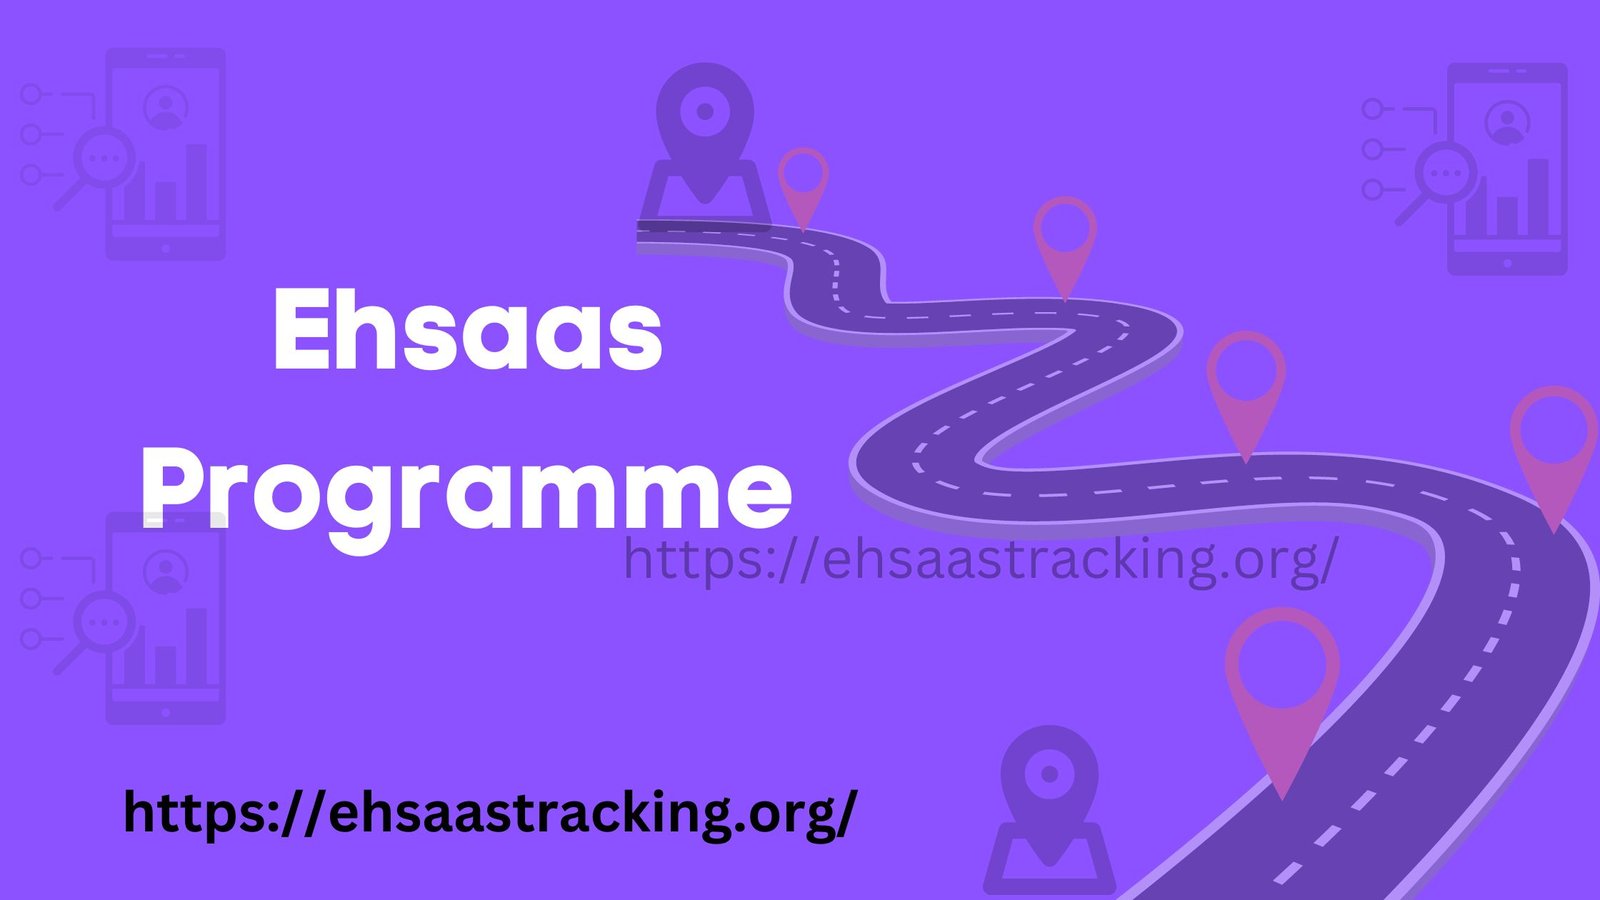 Ehsaas Programme